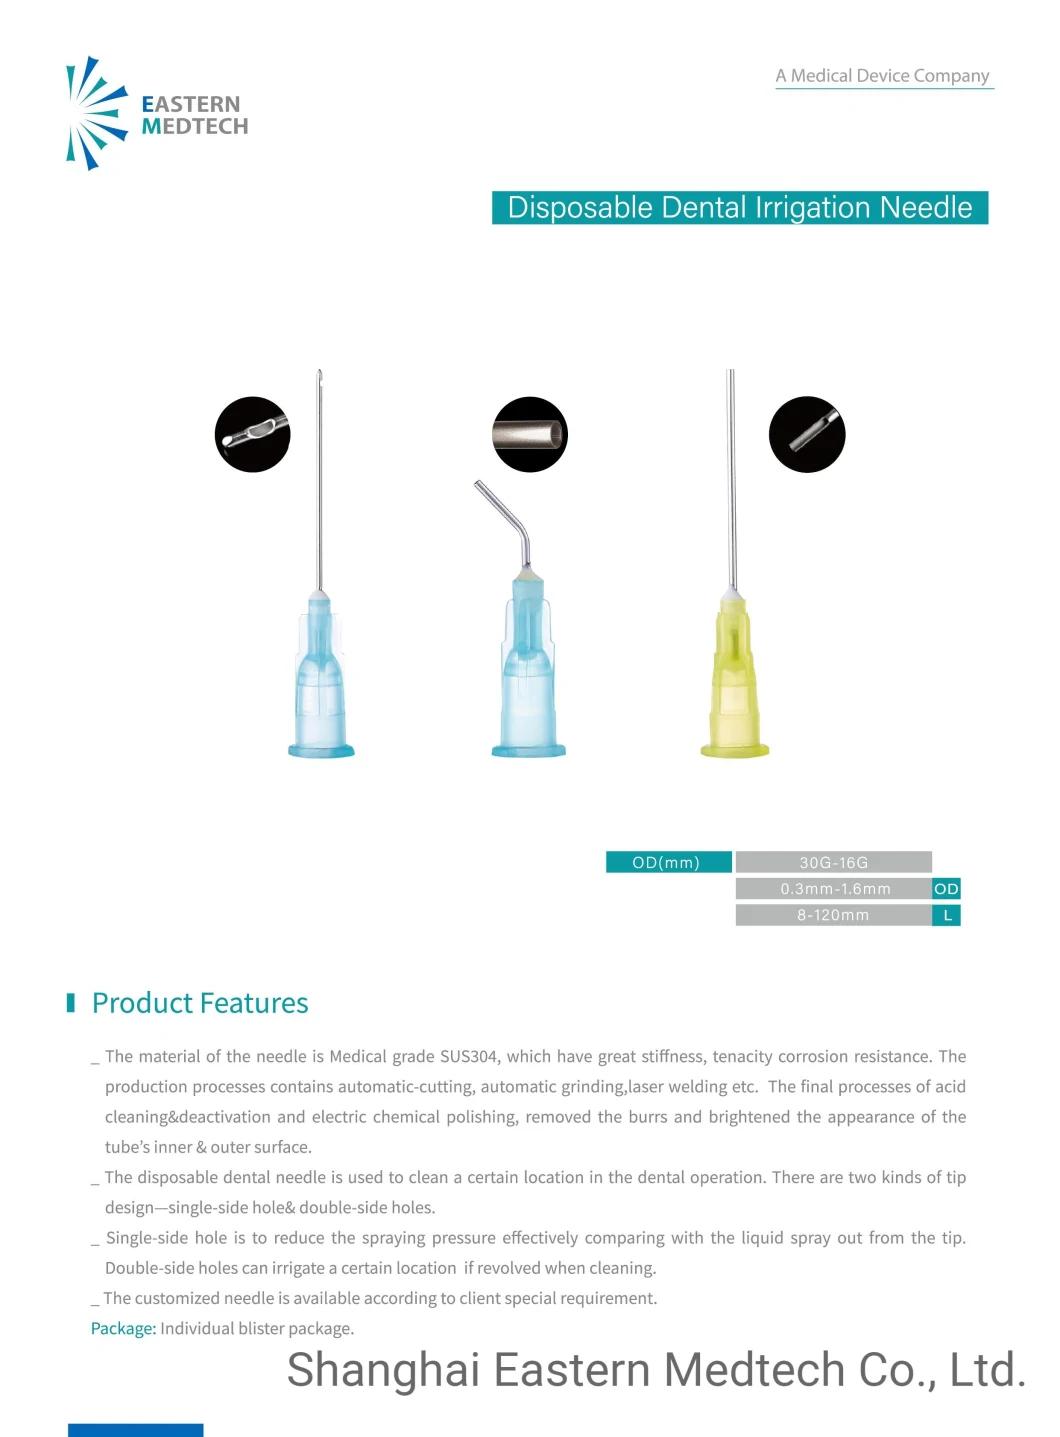 Professional Needle Manufacturer Made Disposable Dental Irrigation Needle